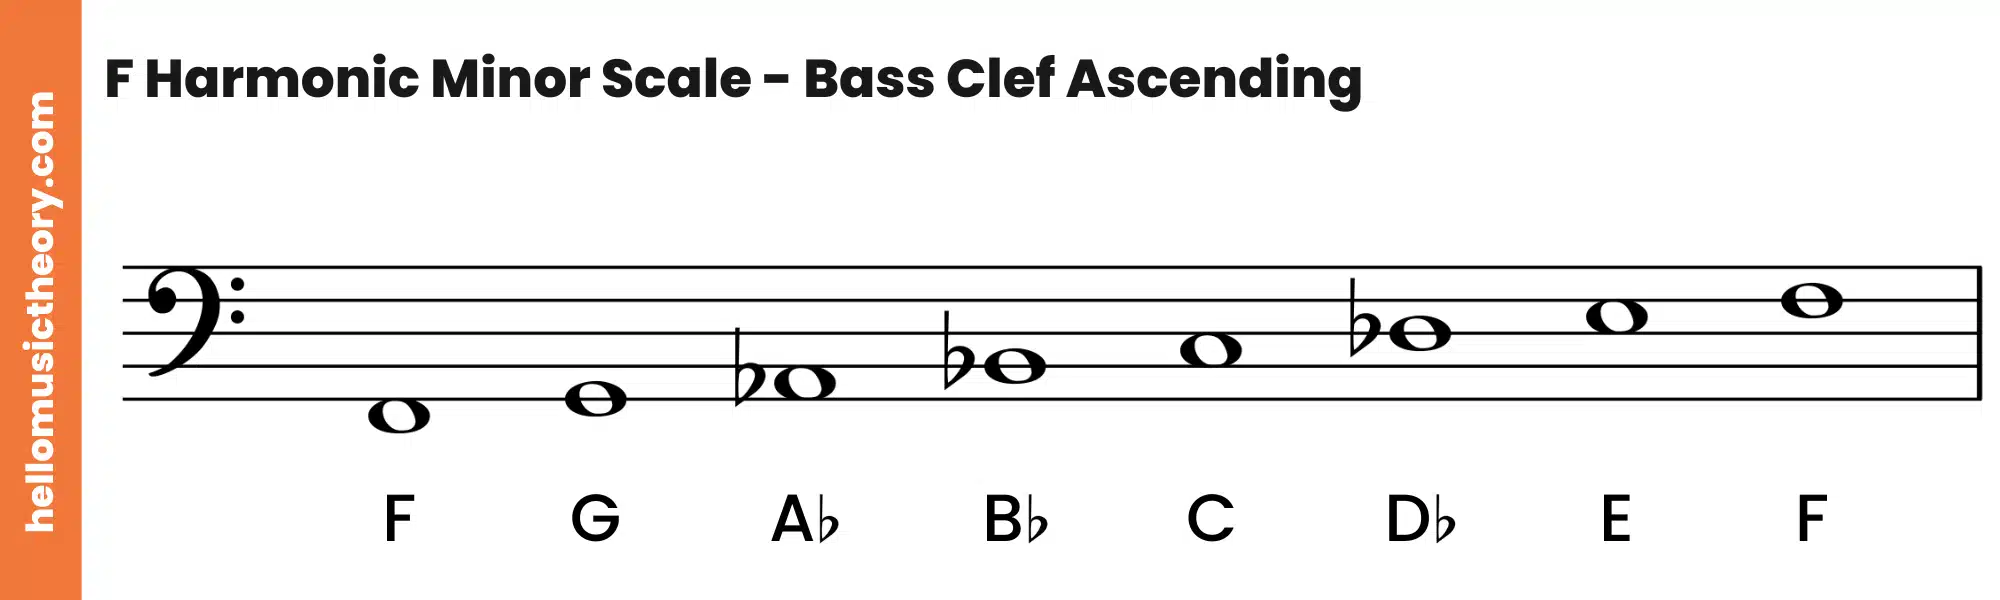 F Harmonic Minor Scale Bass Clef Ascending